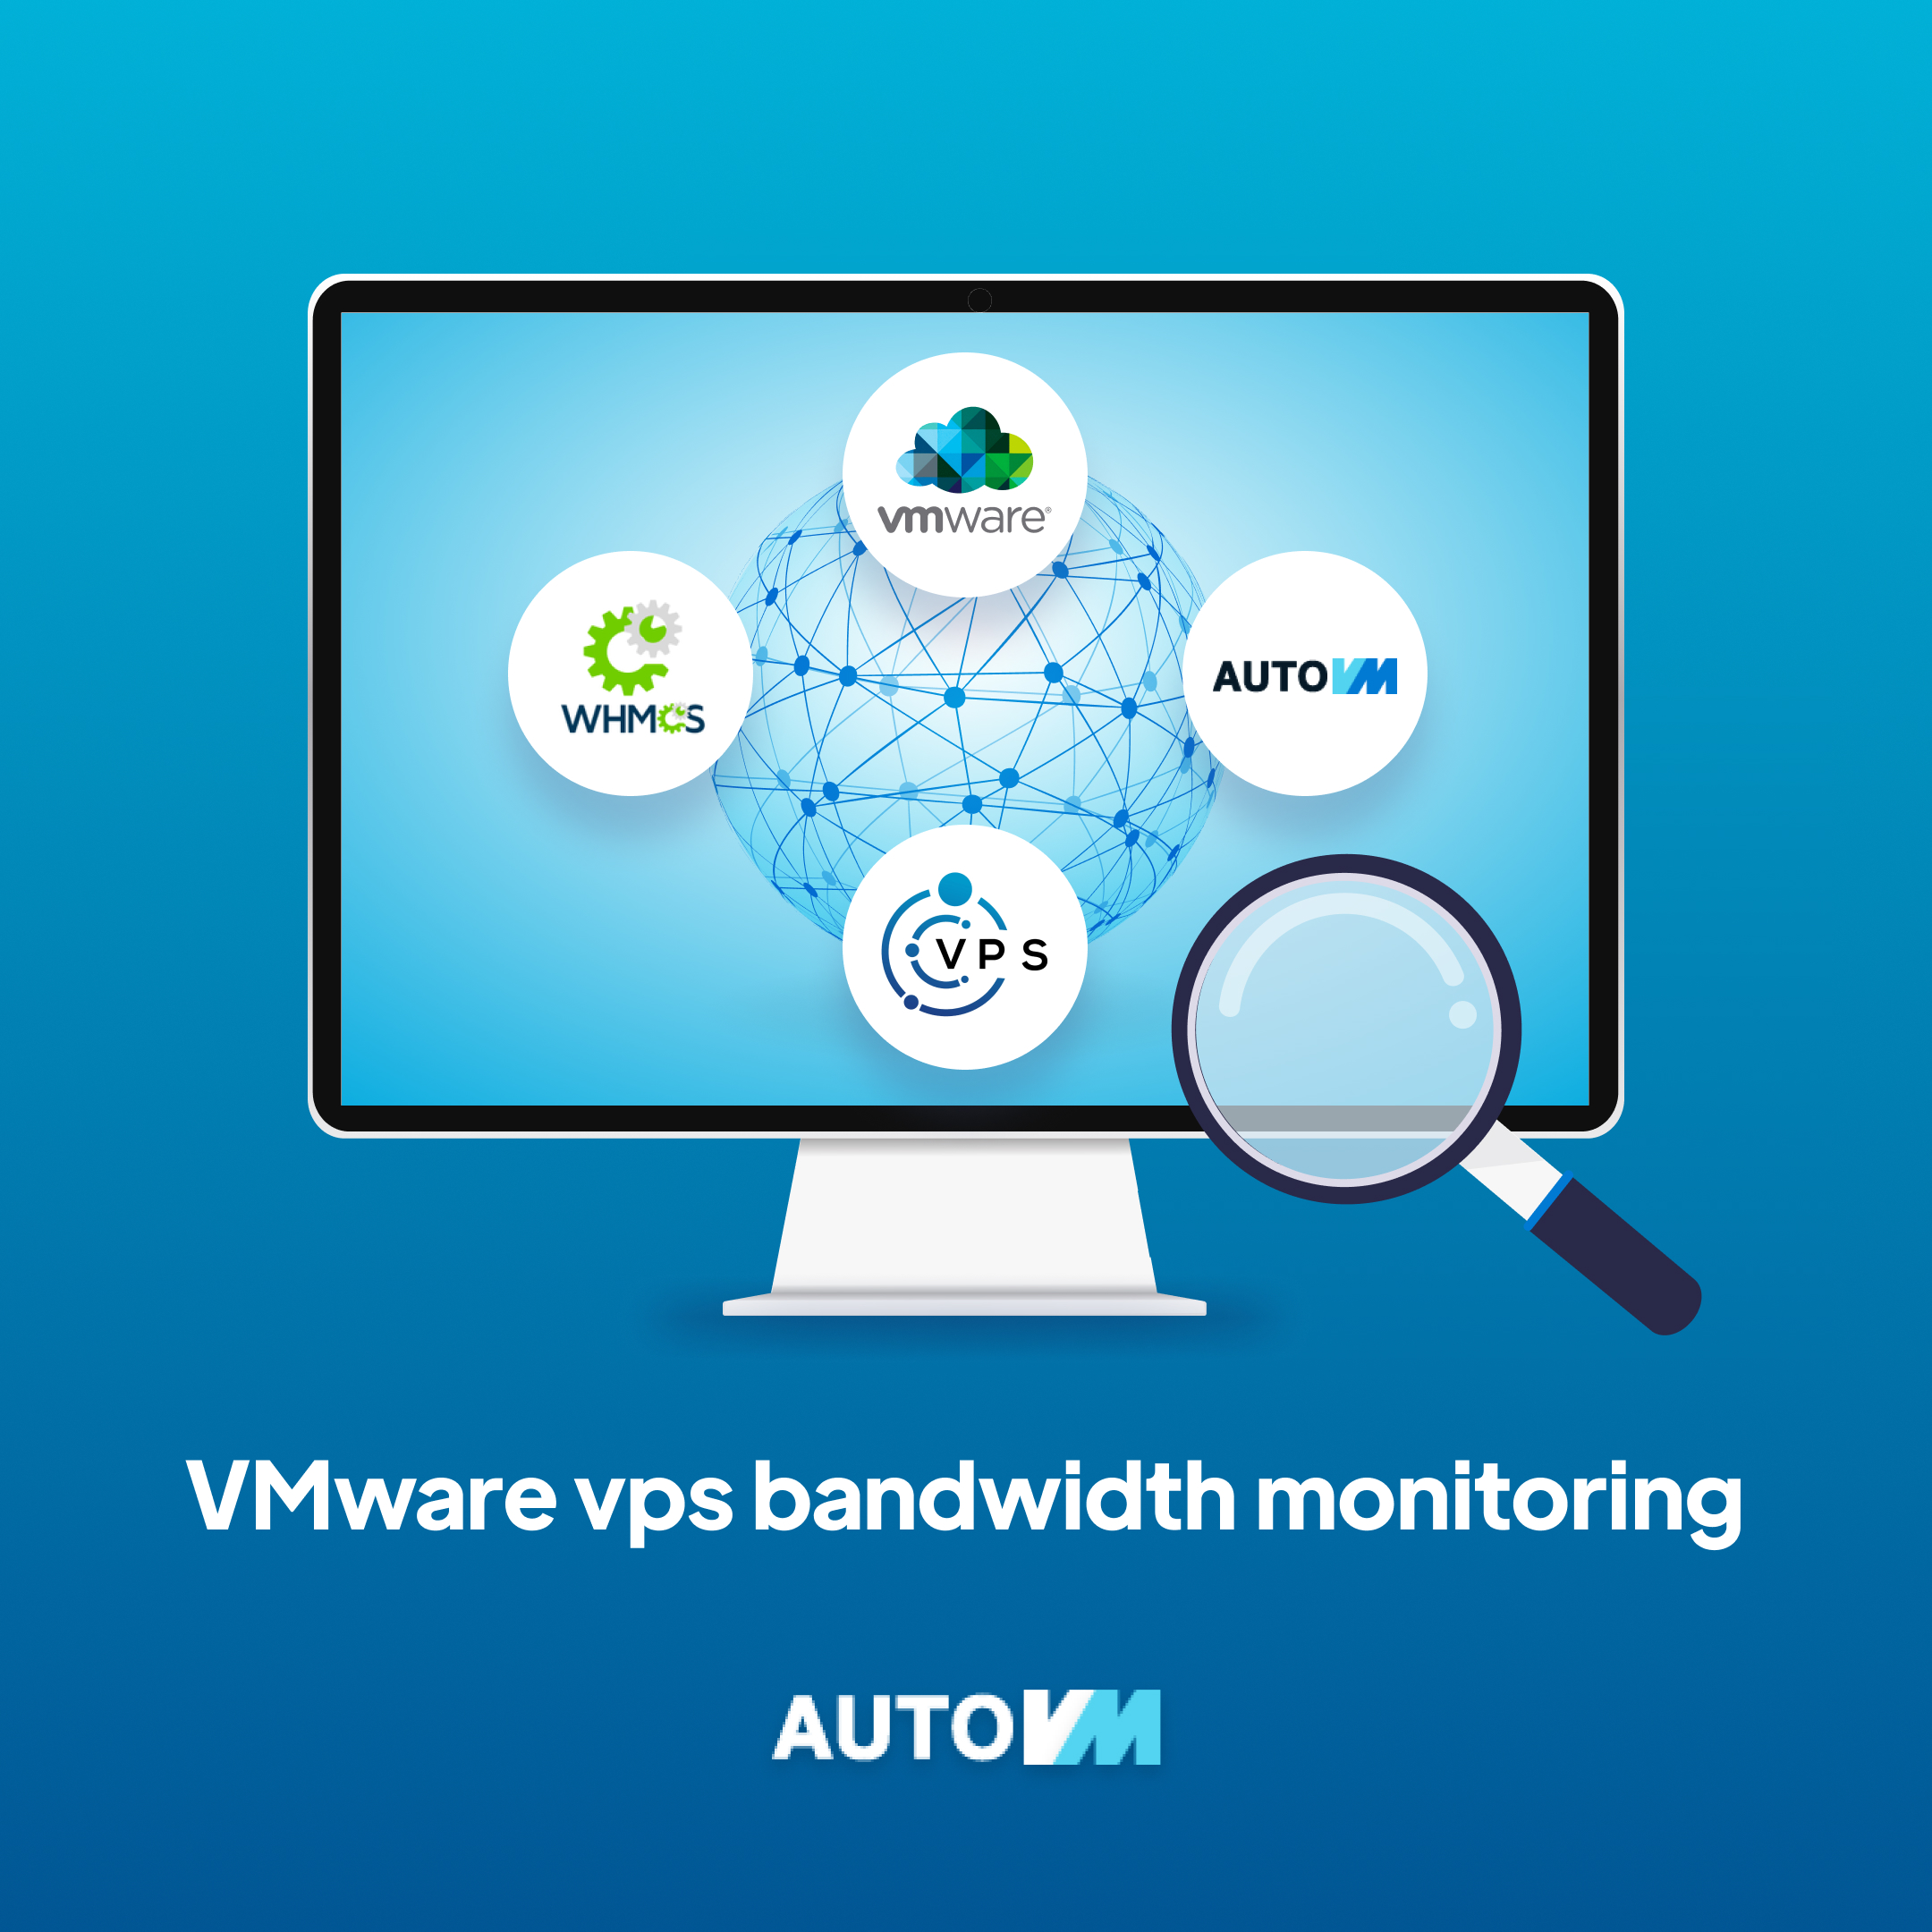 VMware network traffic monitoring